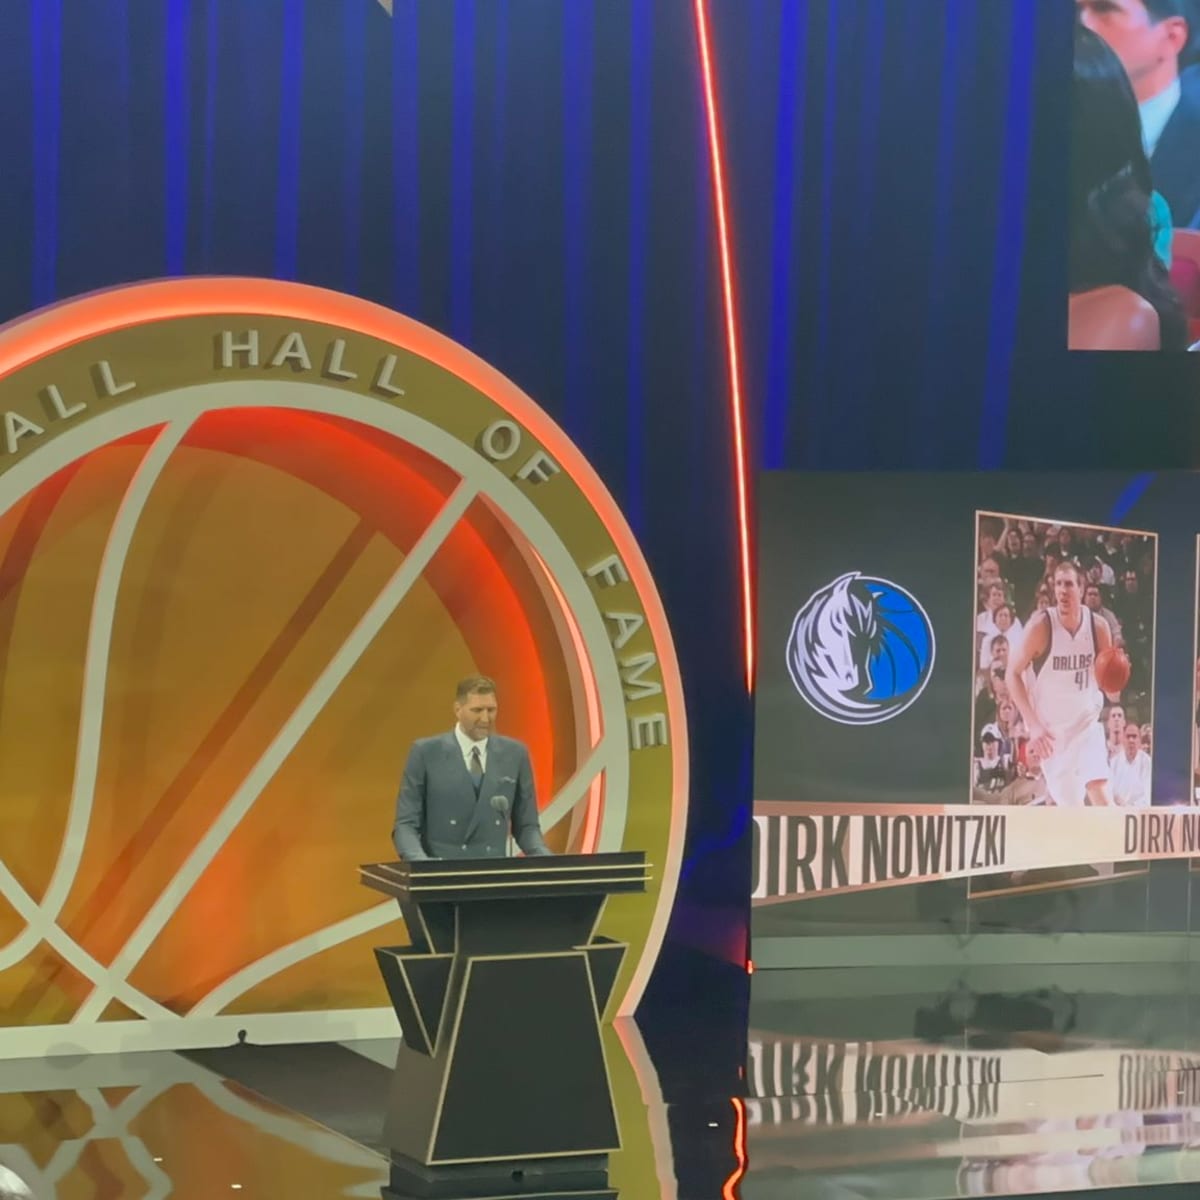 Jason Kidd, Steve Nash to Present Dallas Mavs Legend Dirk Nowitzki at Hall  of Fame - Sports Illustrated Dallas Mavericks News, Analysis and More